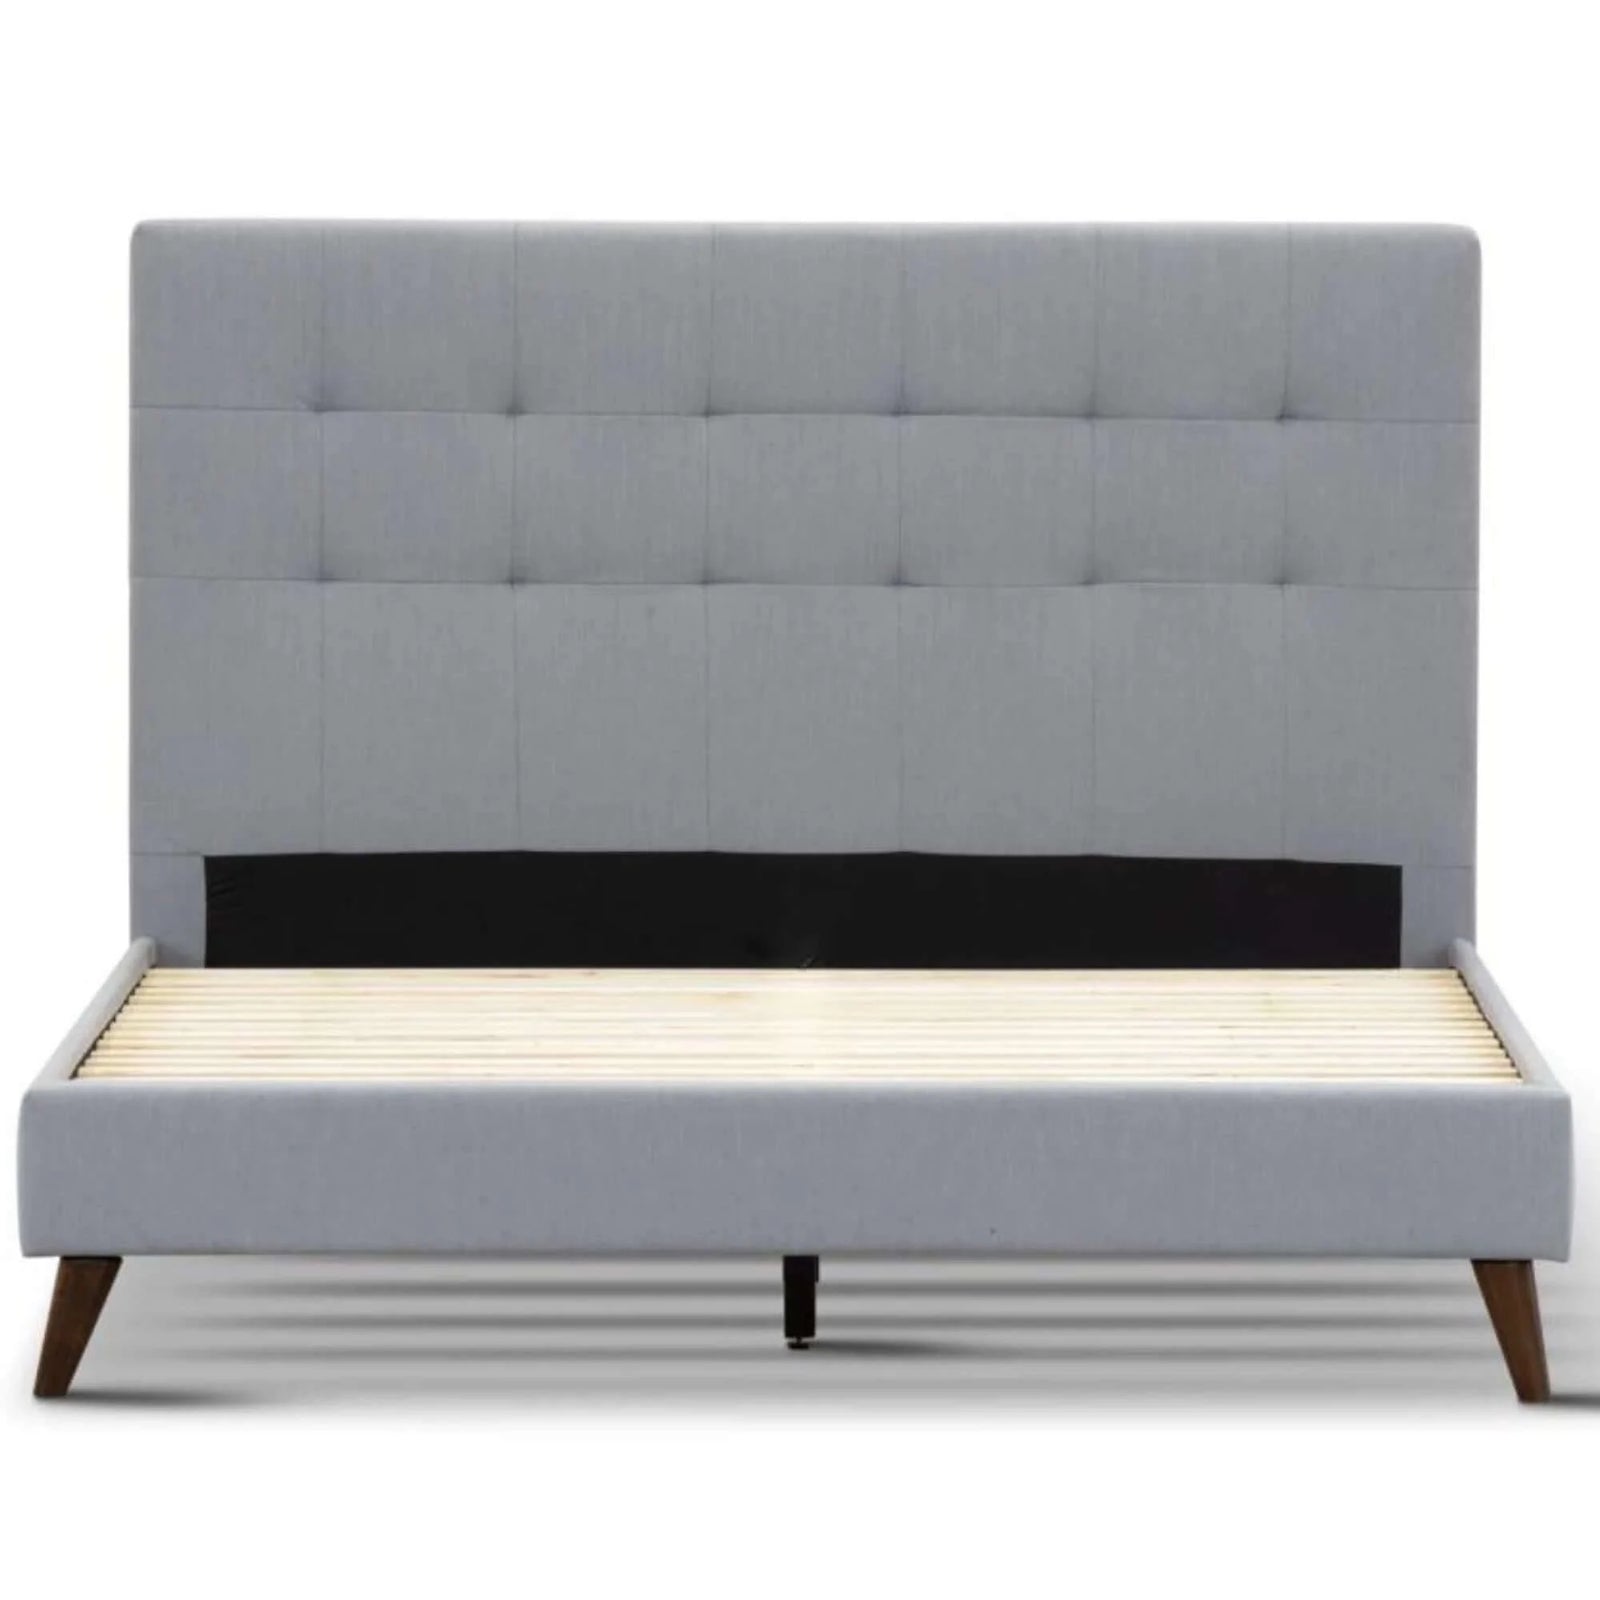 Buy volga queen bed platform frame fabric upholstered mattress base - grey - upinteriors-Upinteriors